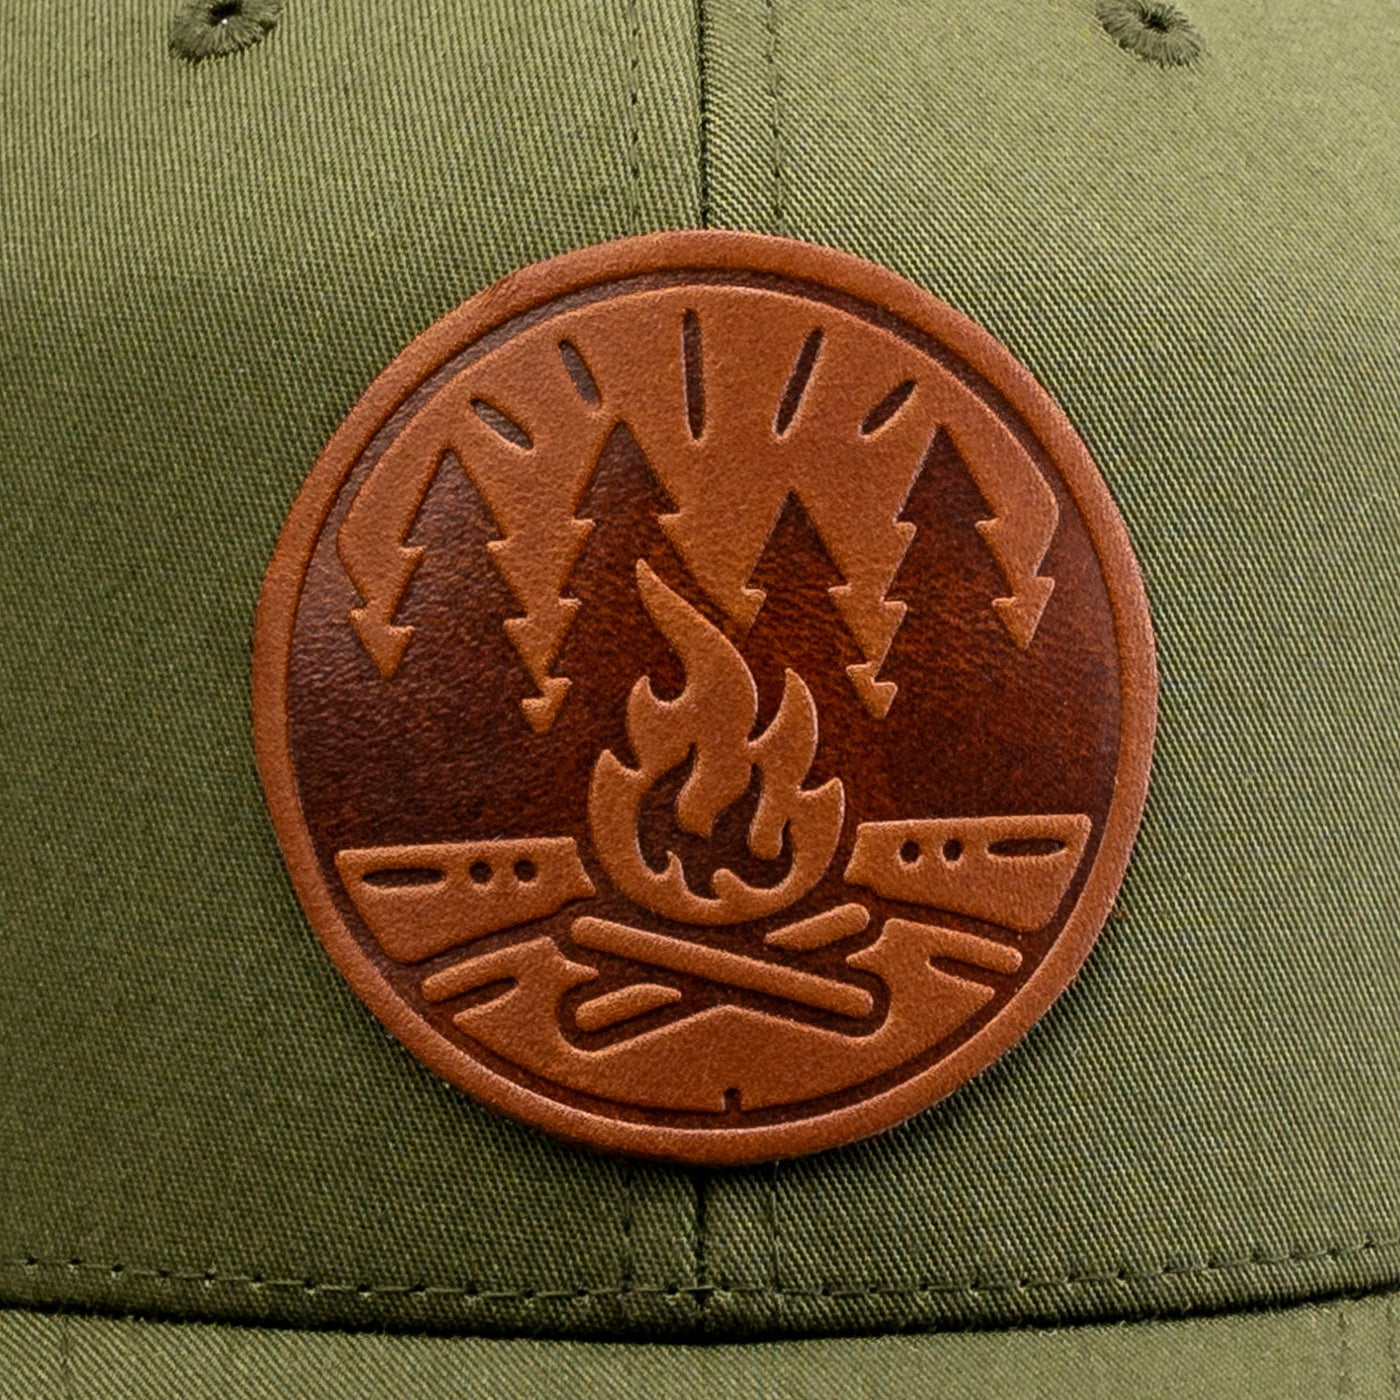 Campfire Hat Popov Leather®